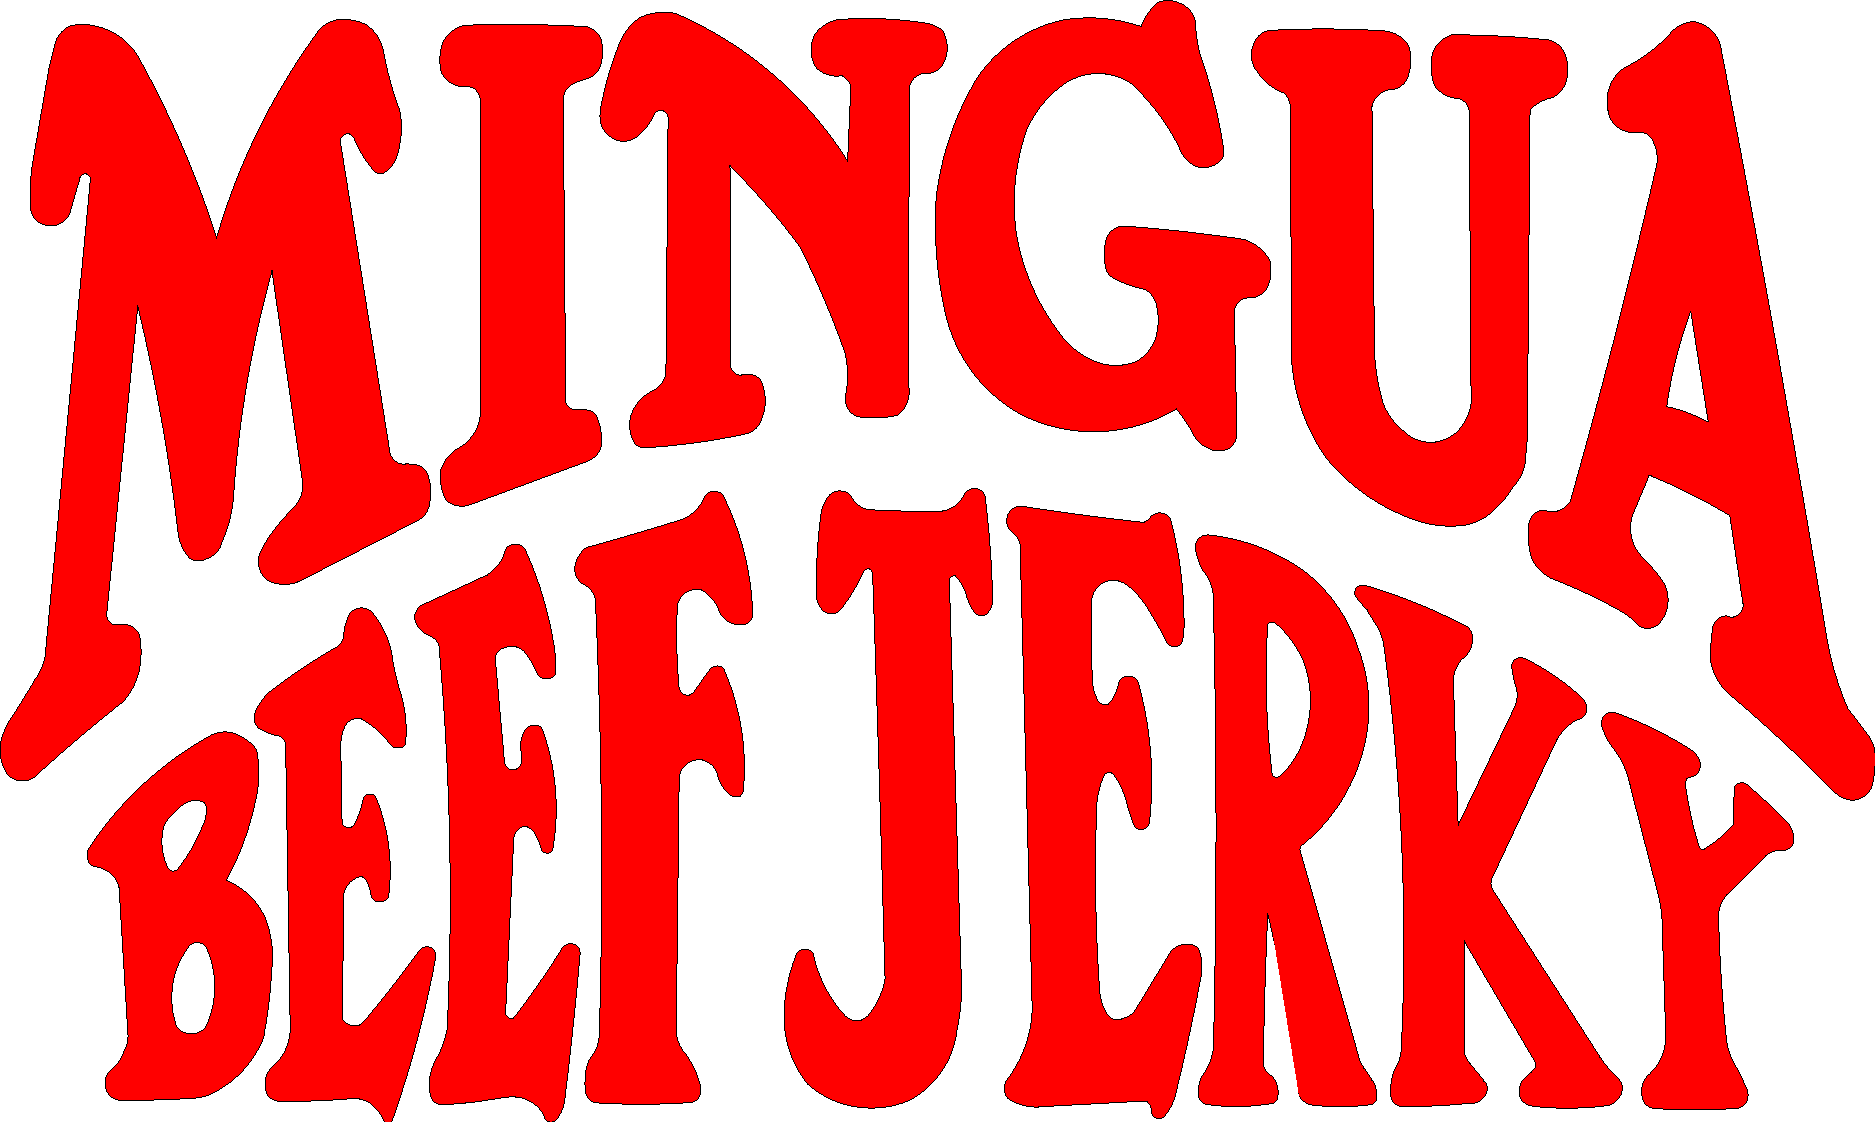 Mingua Beef Jerky Logo Vector